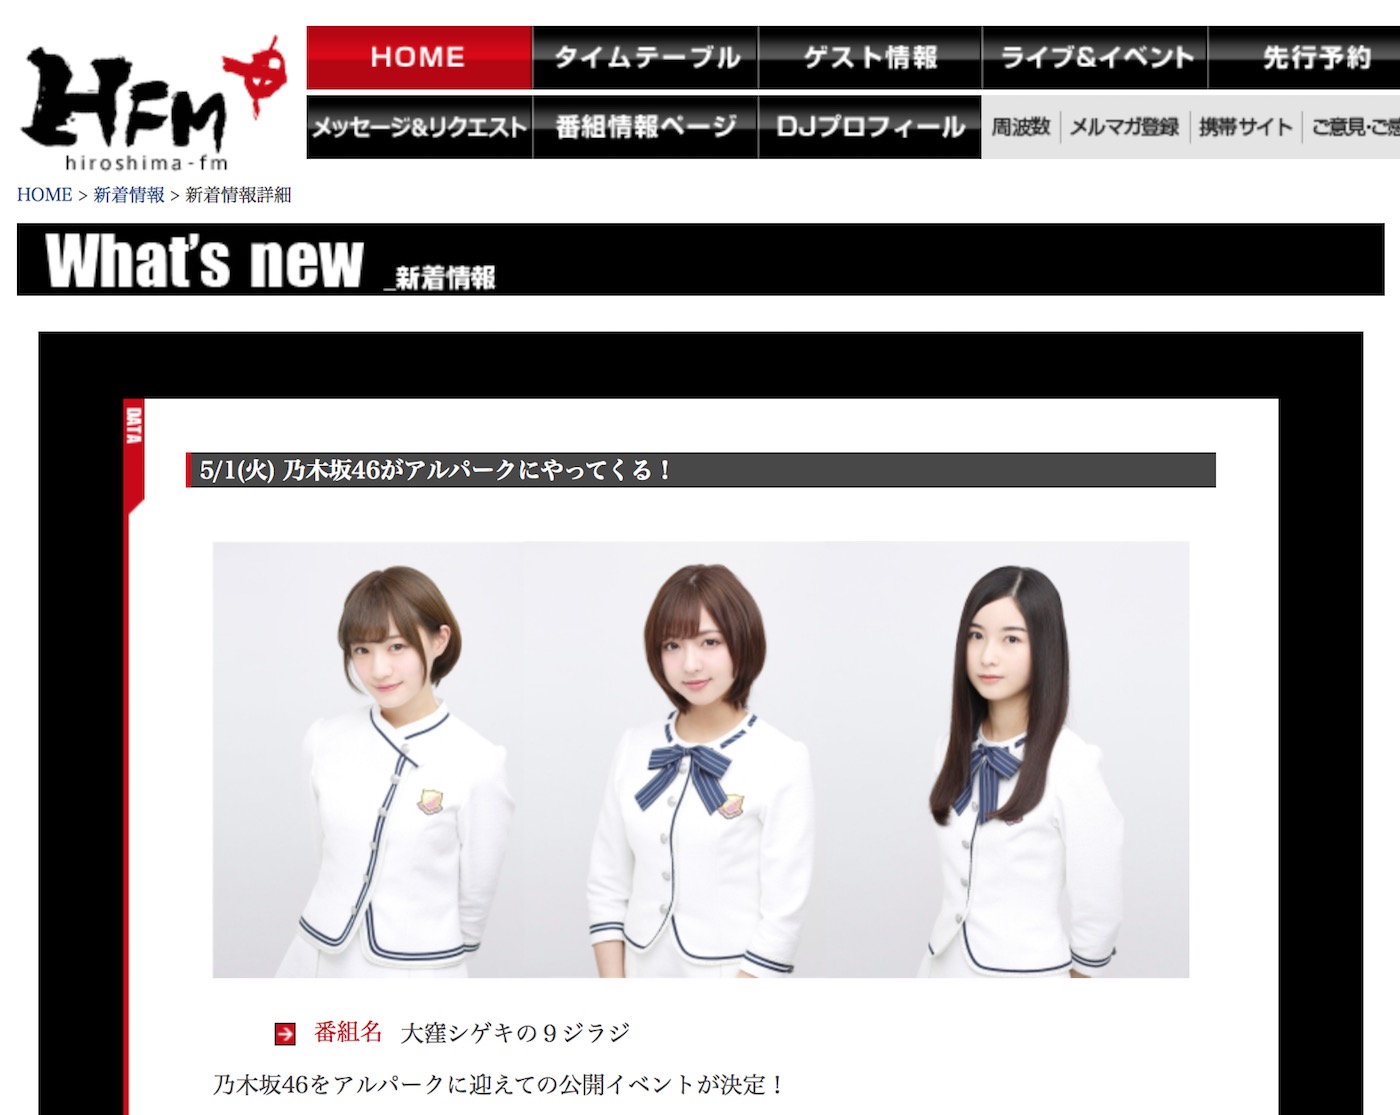 HFM Web Site│新着情報│5/1(火) 乃木坂46がアルパークにやってくる！